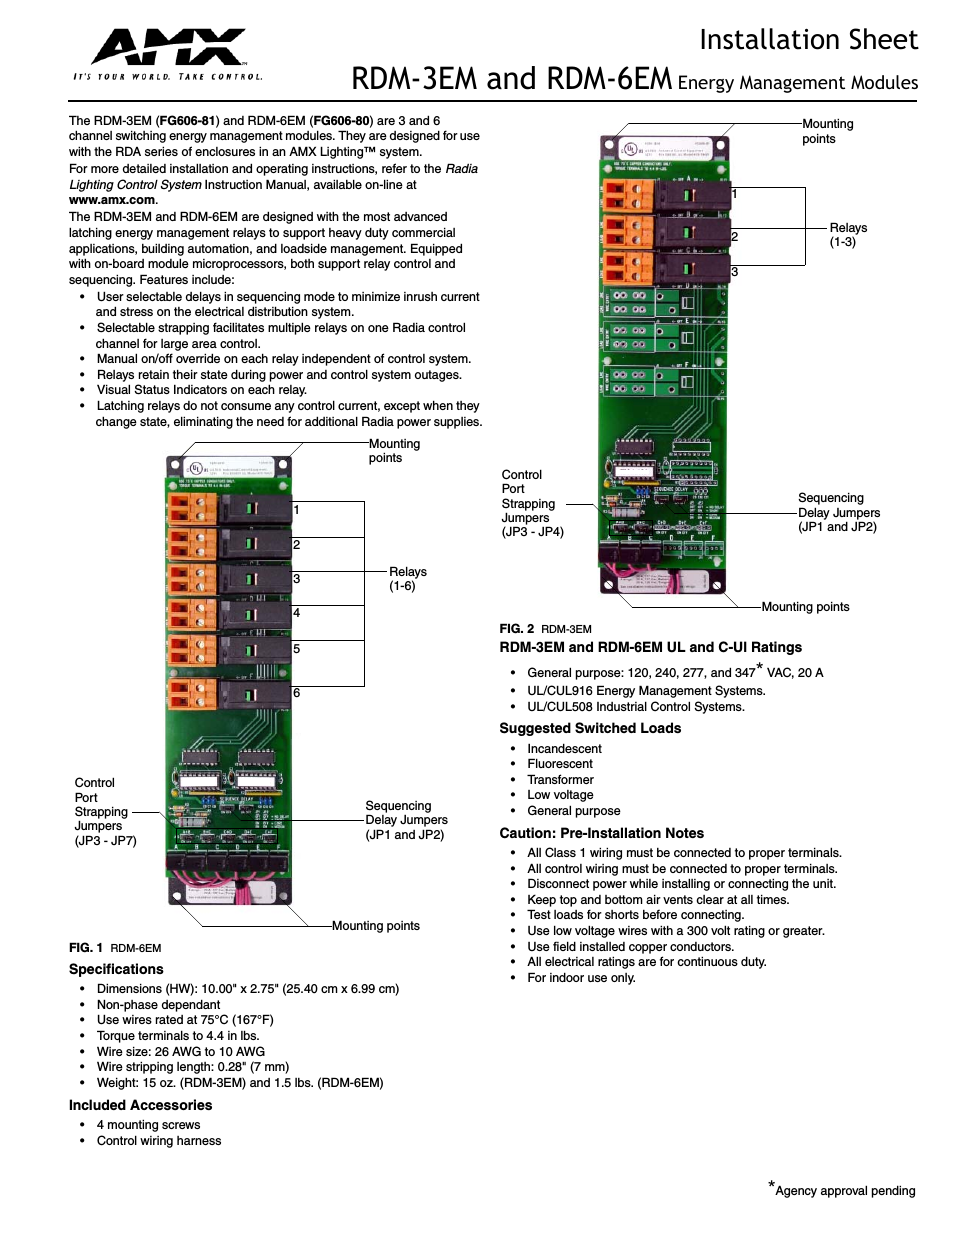 Energy Management Modules RDM-6EM